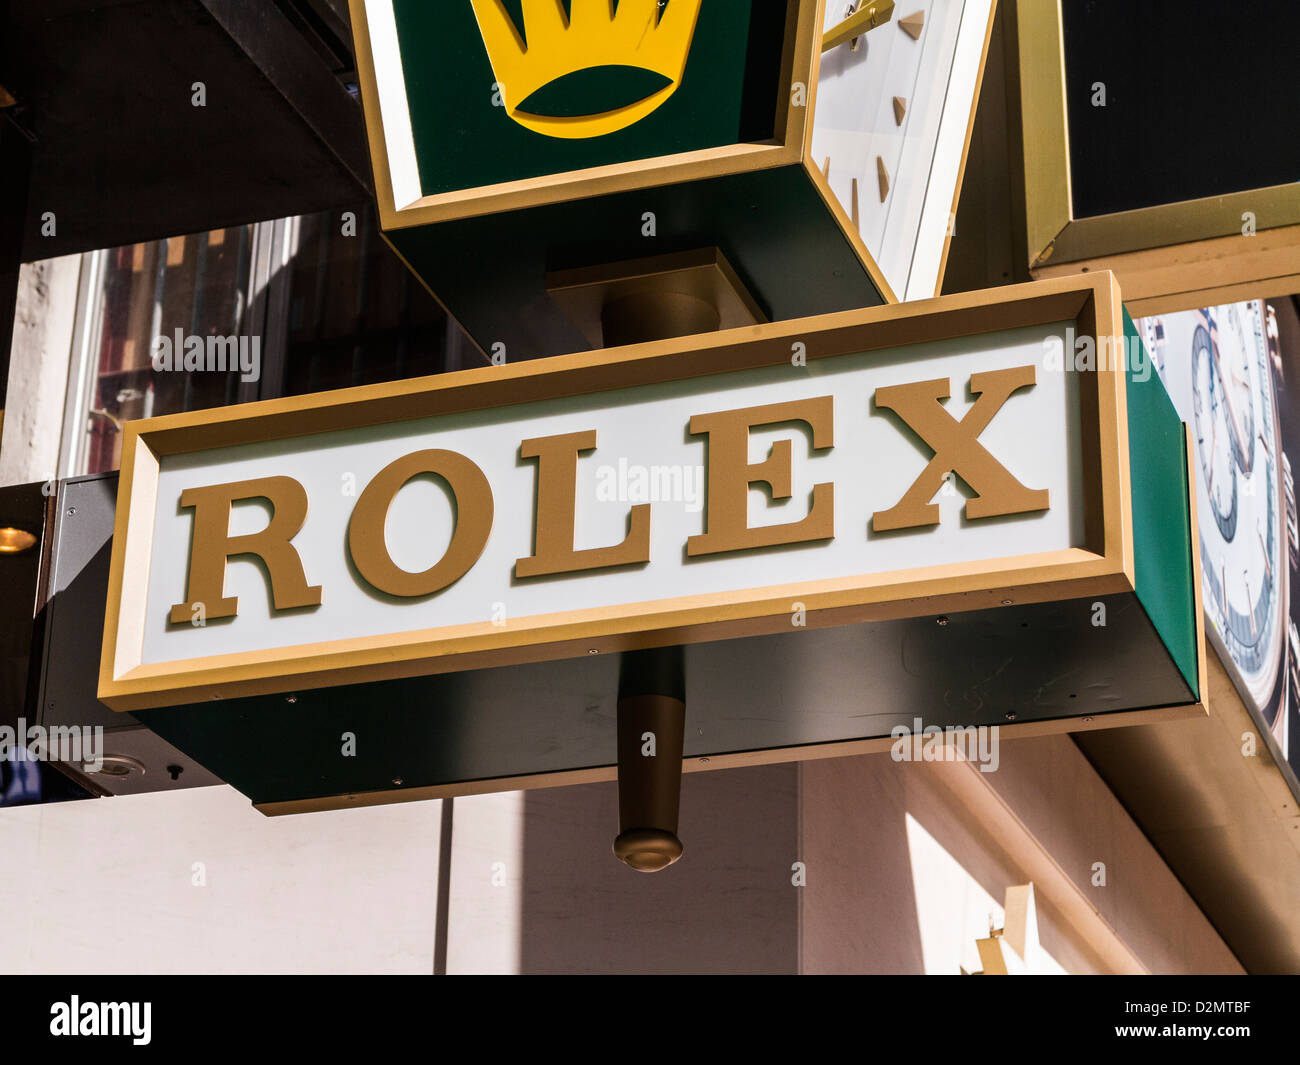 Rolex sign. Stock Photo